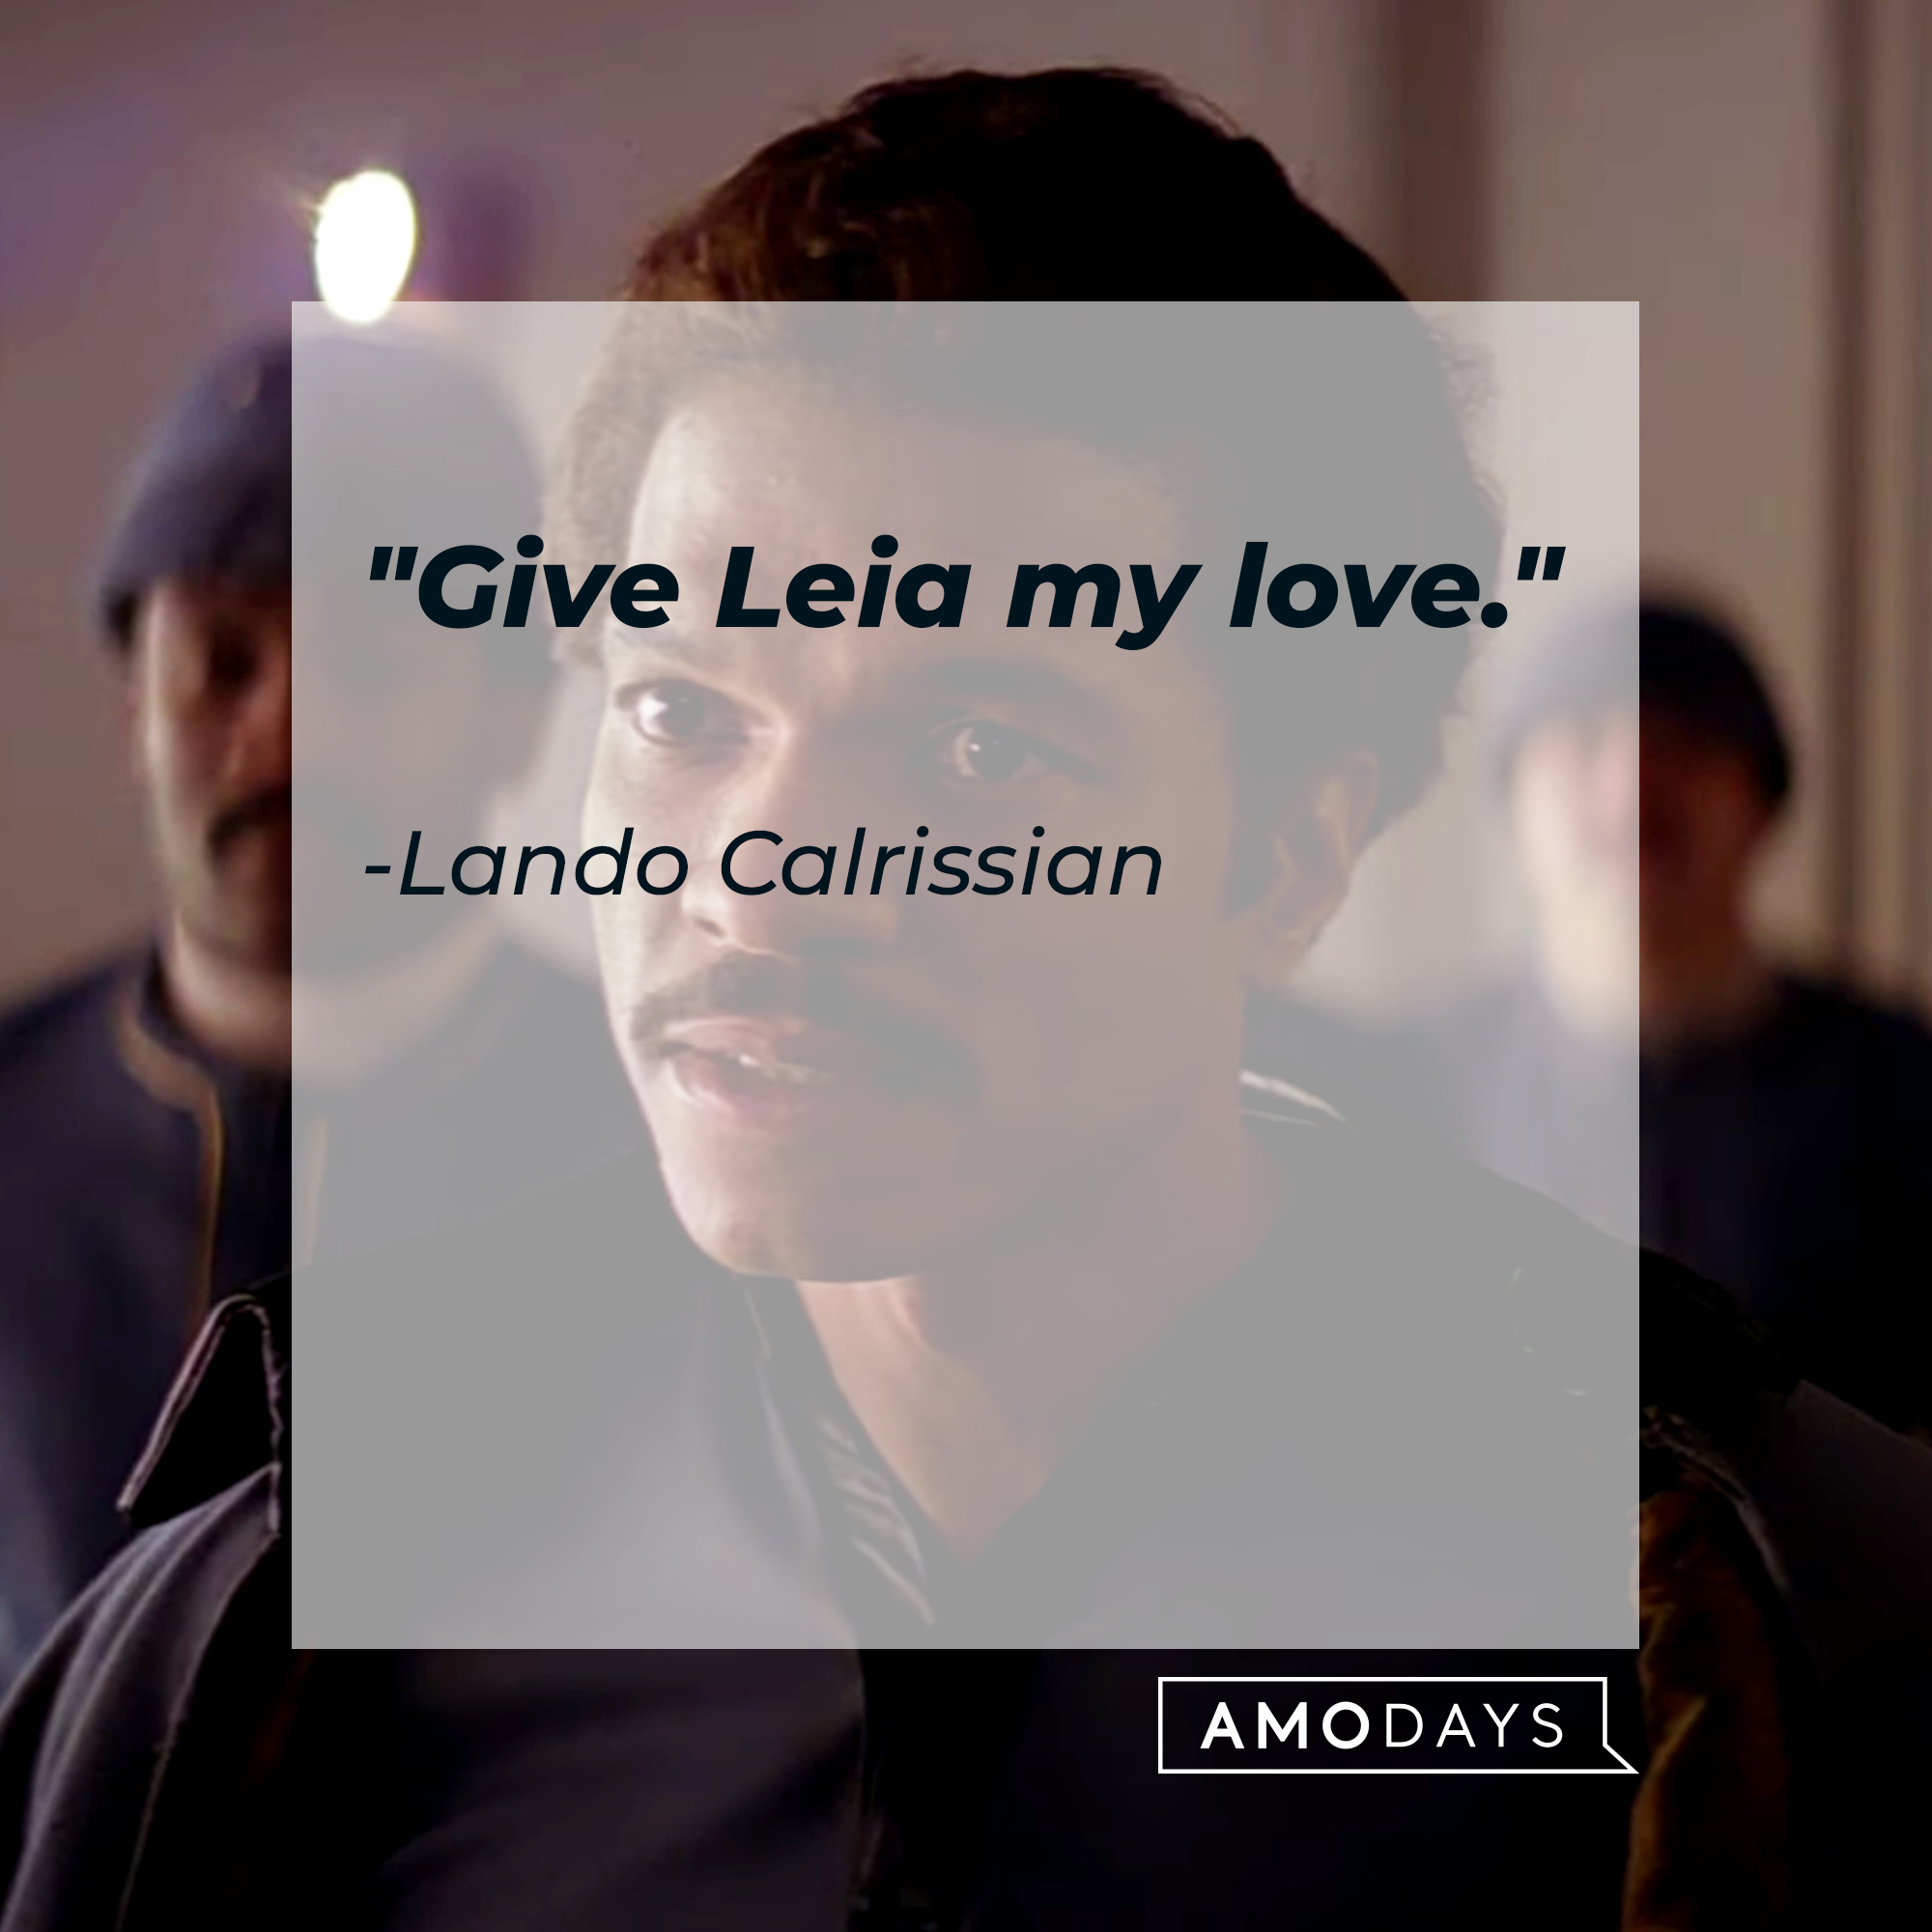 Lando Calrissian's quote, "Give Leia my love." | Source: Facebook/StarWars